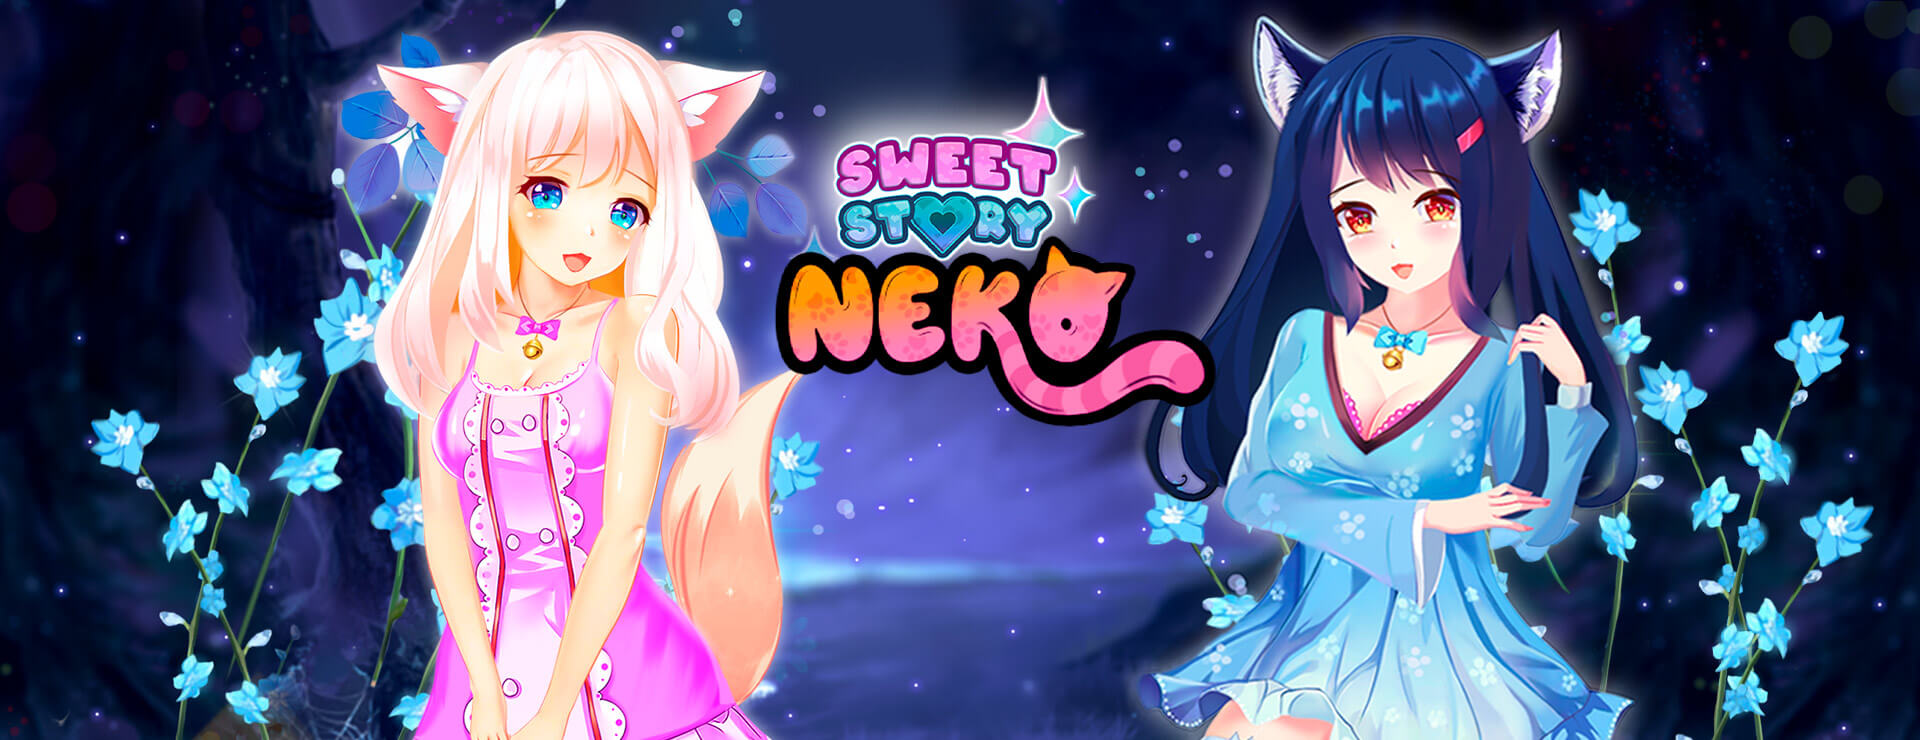 Sweet Story Neko - 休闲游戏 遊戲